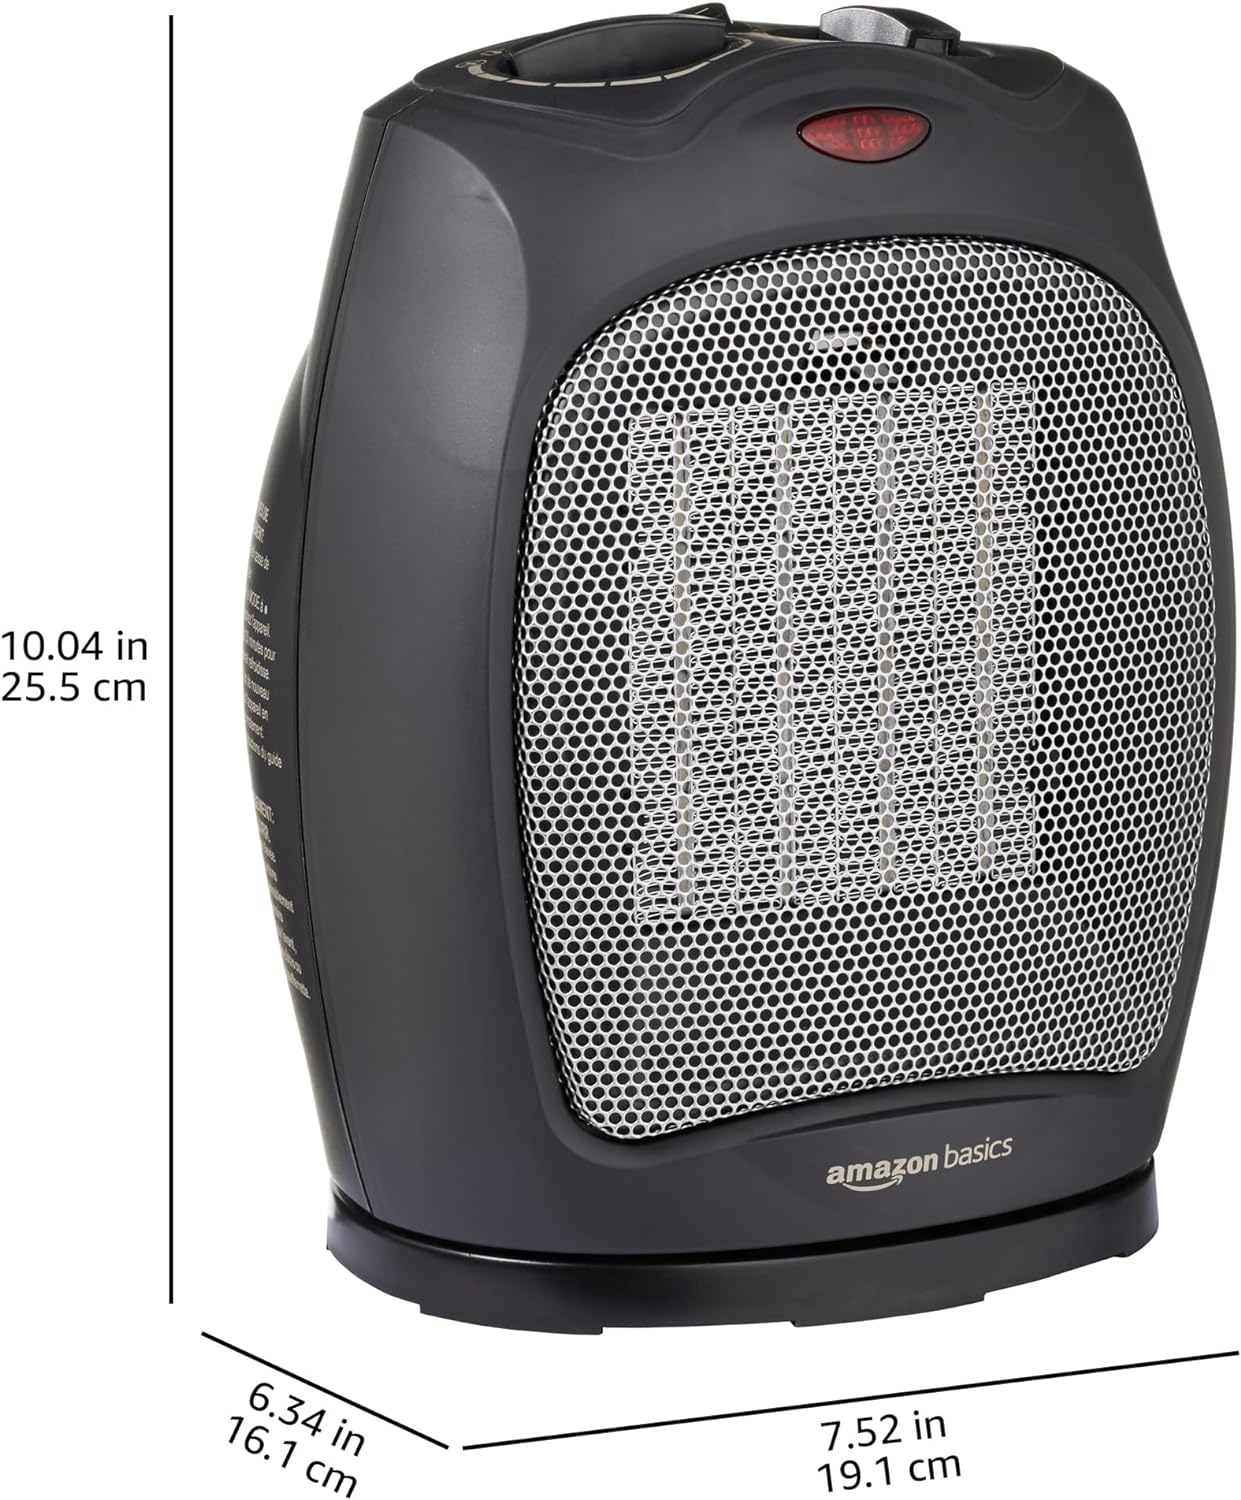 Amazon Basics 1500W Oscillating Ceramic Heater with Adjustable Thermostat, Black